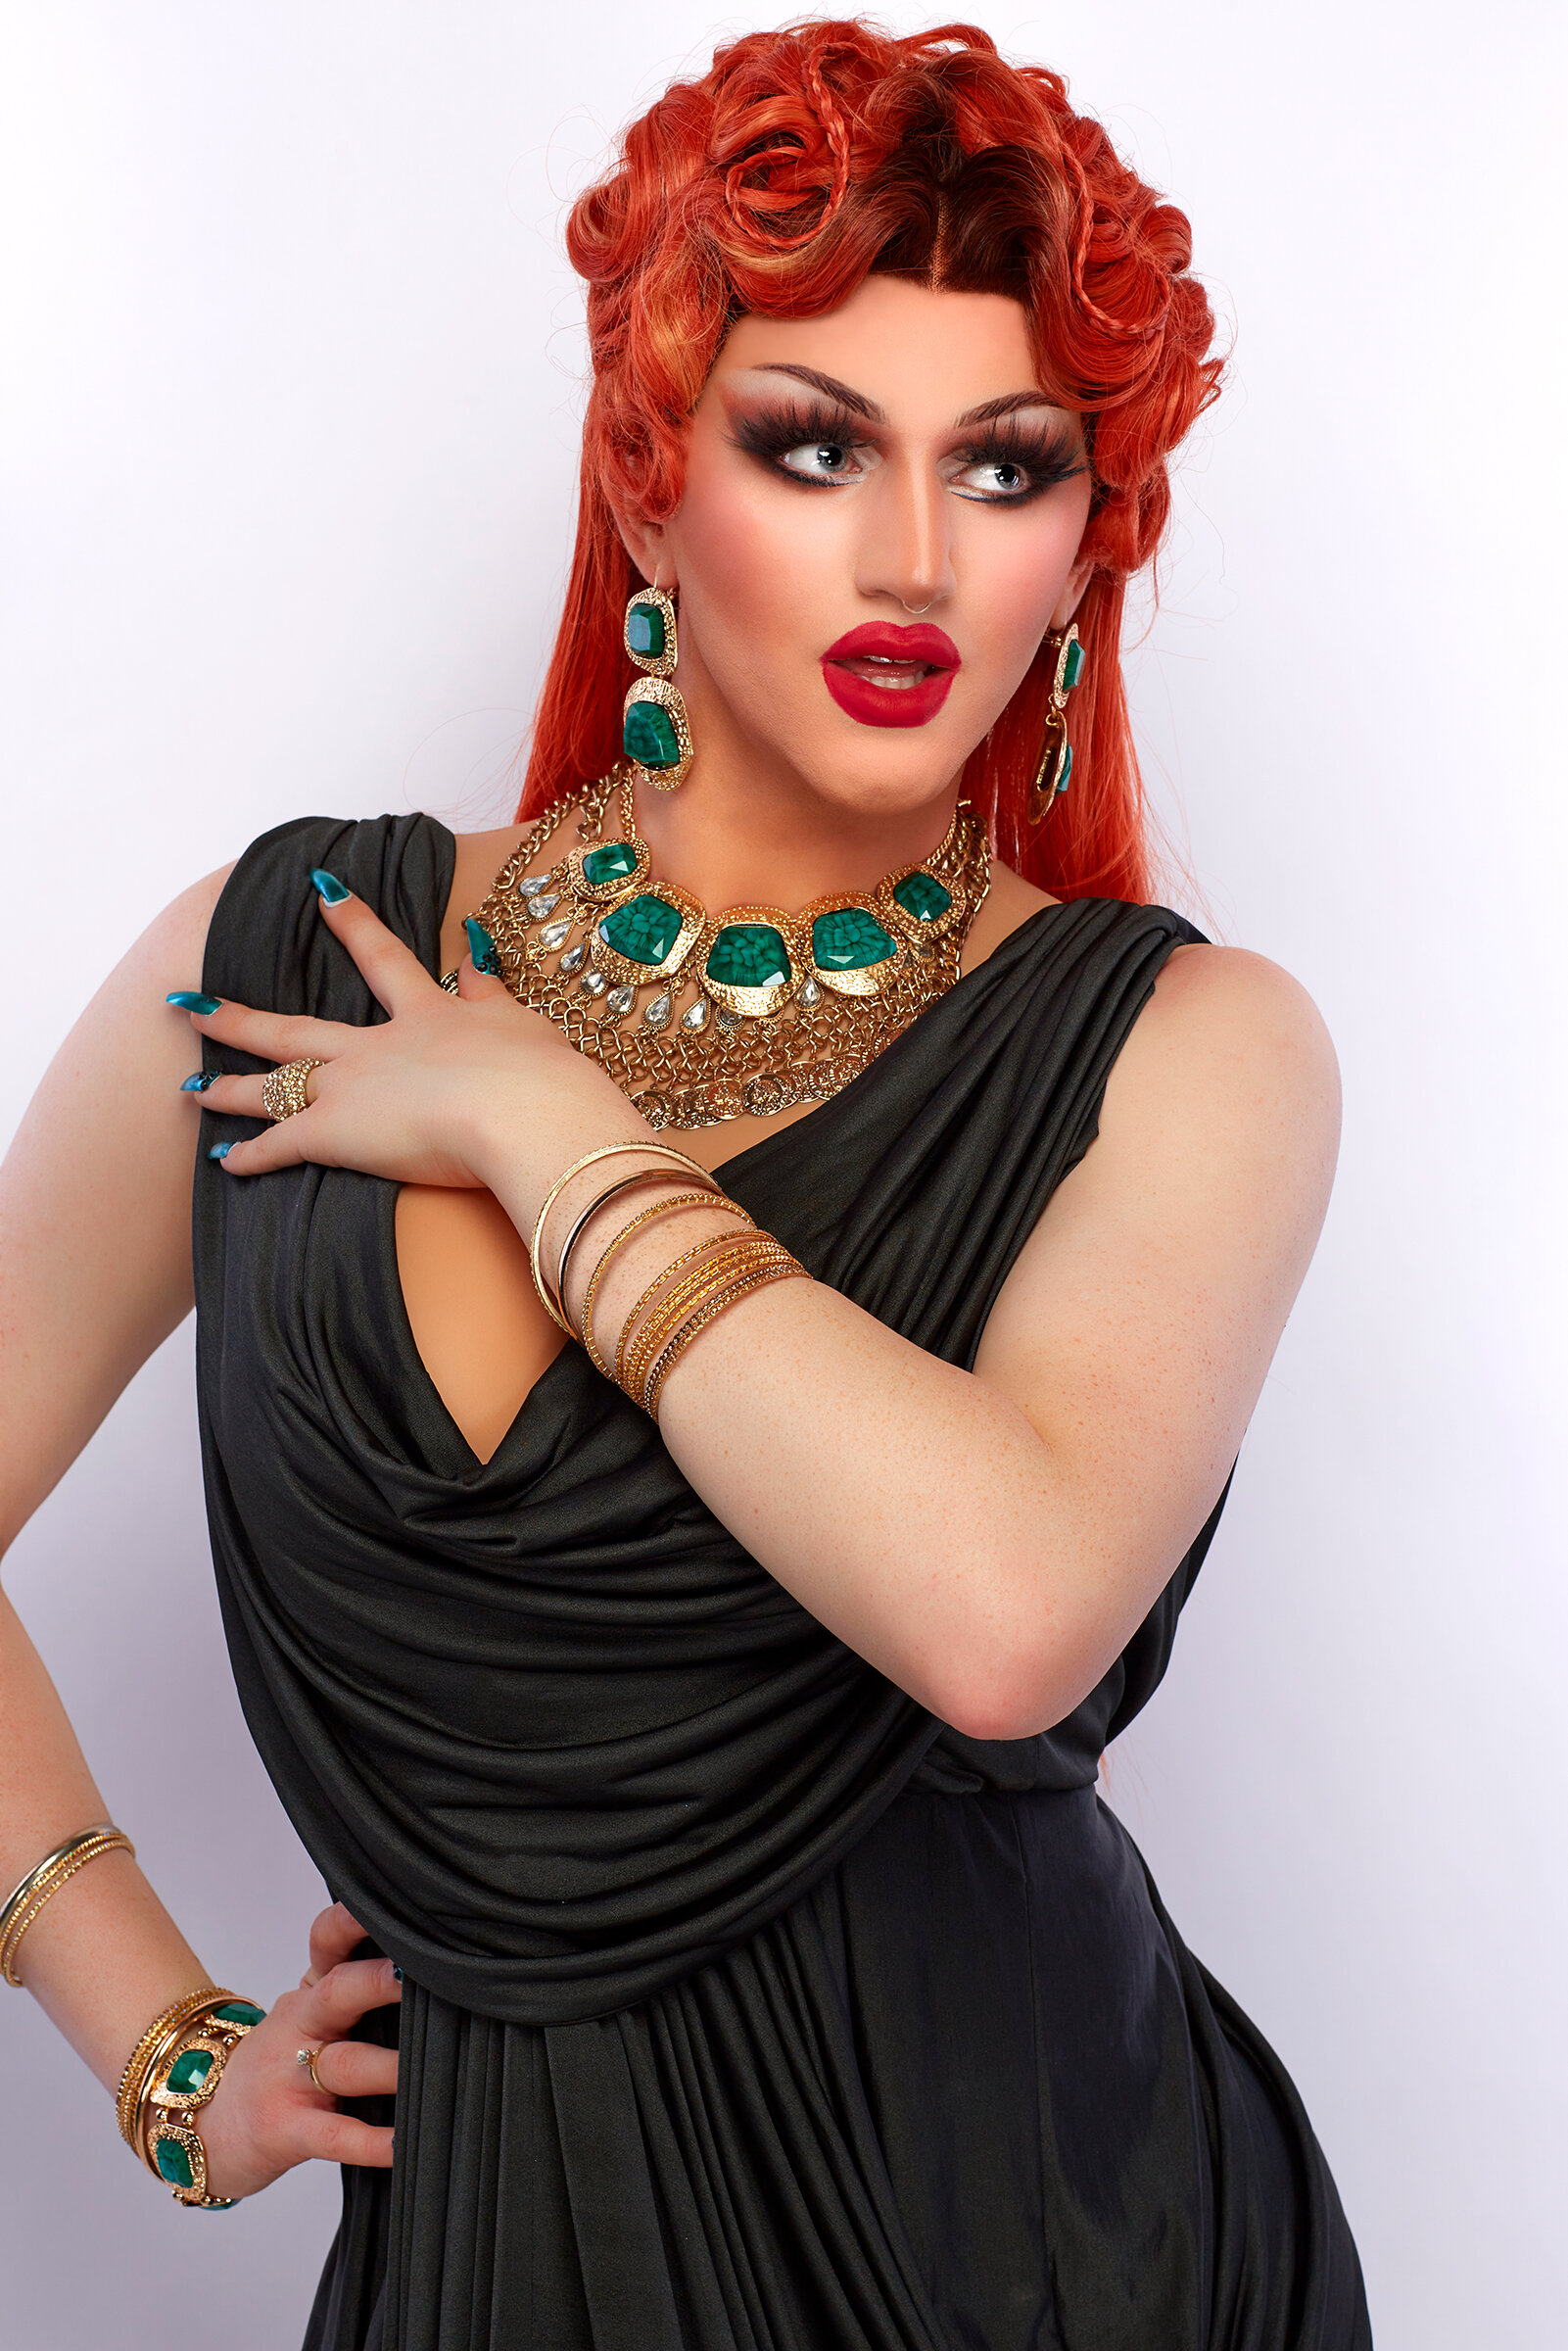 mynx-moscato-drag-royalty-drag-queen-make-up-sydney-artist